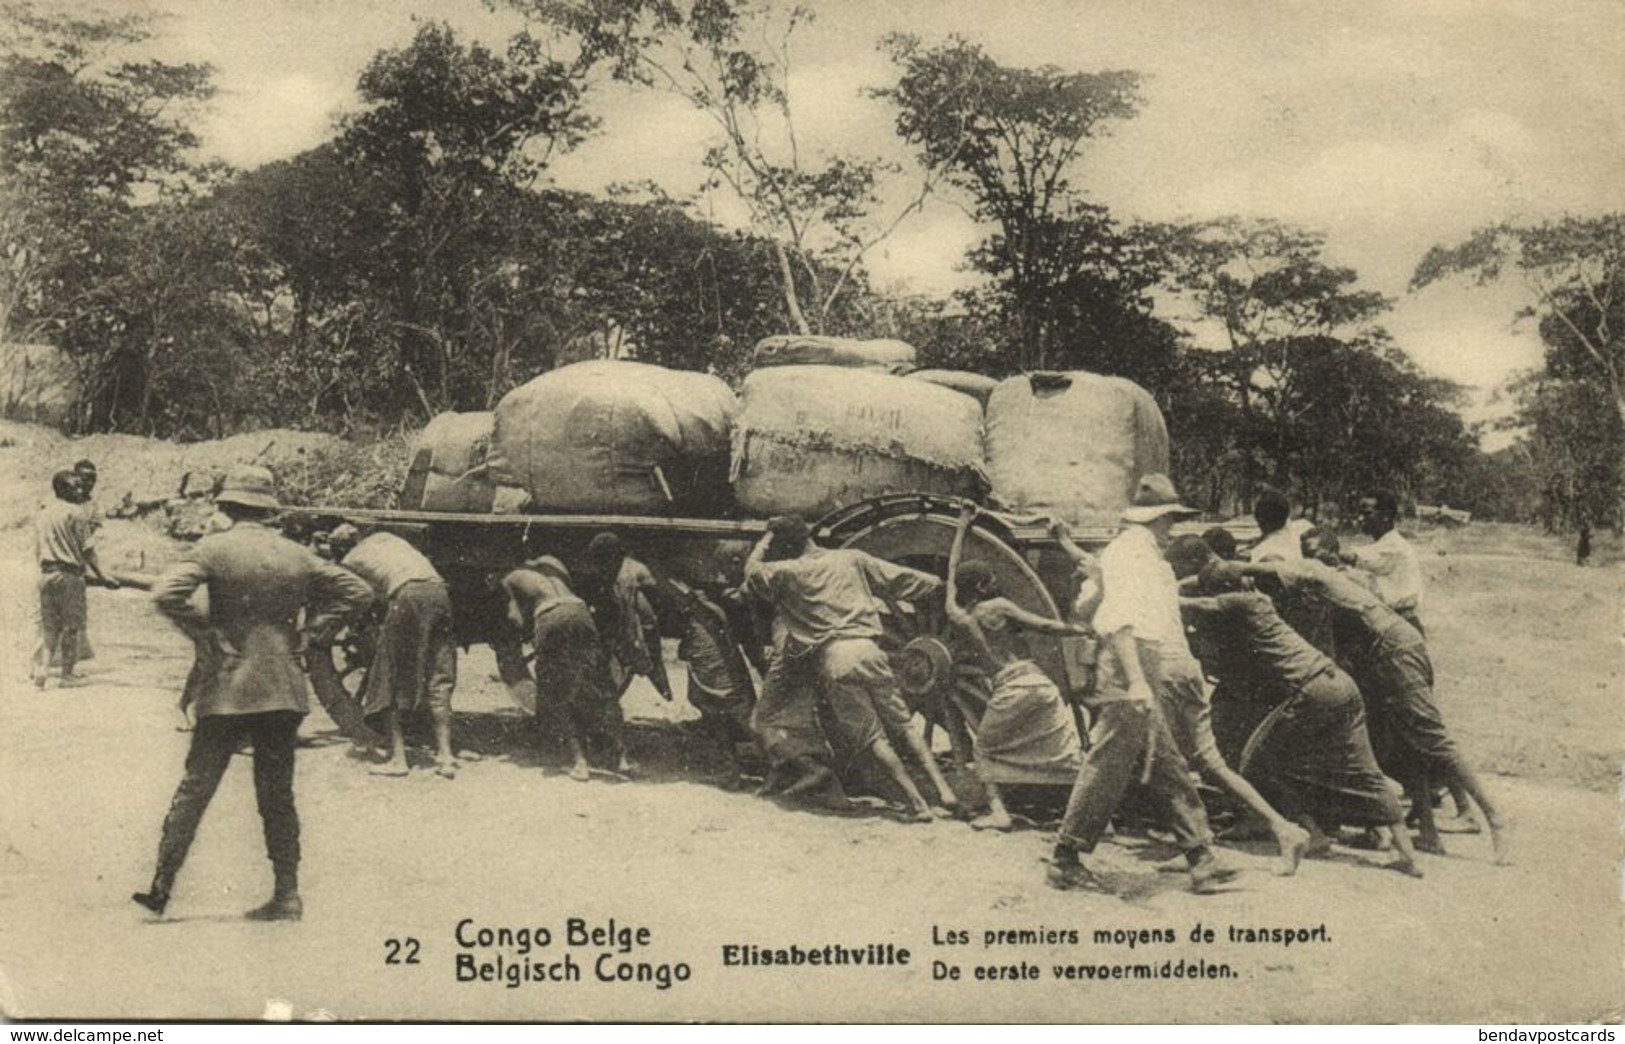 Belgian Congo, ELISABETHVILLE, First Means Of Transport (1920s) Postcard (22) - Belgian Congo